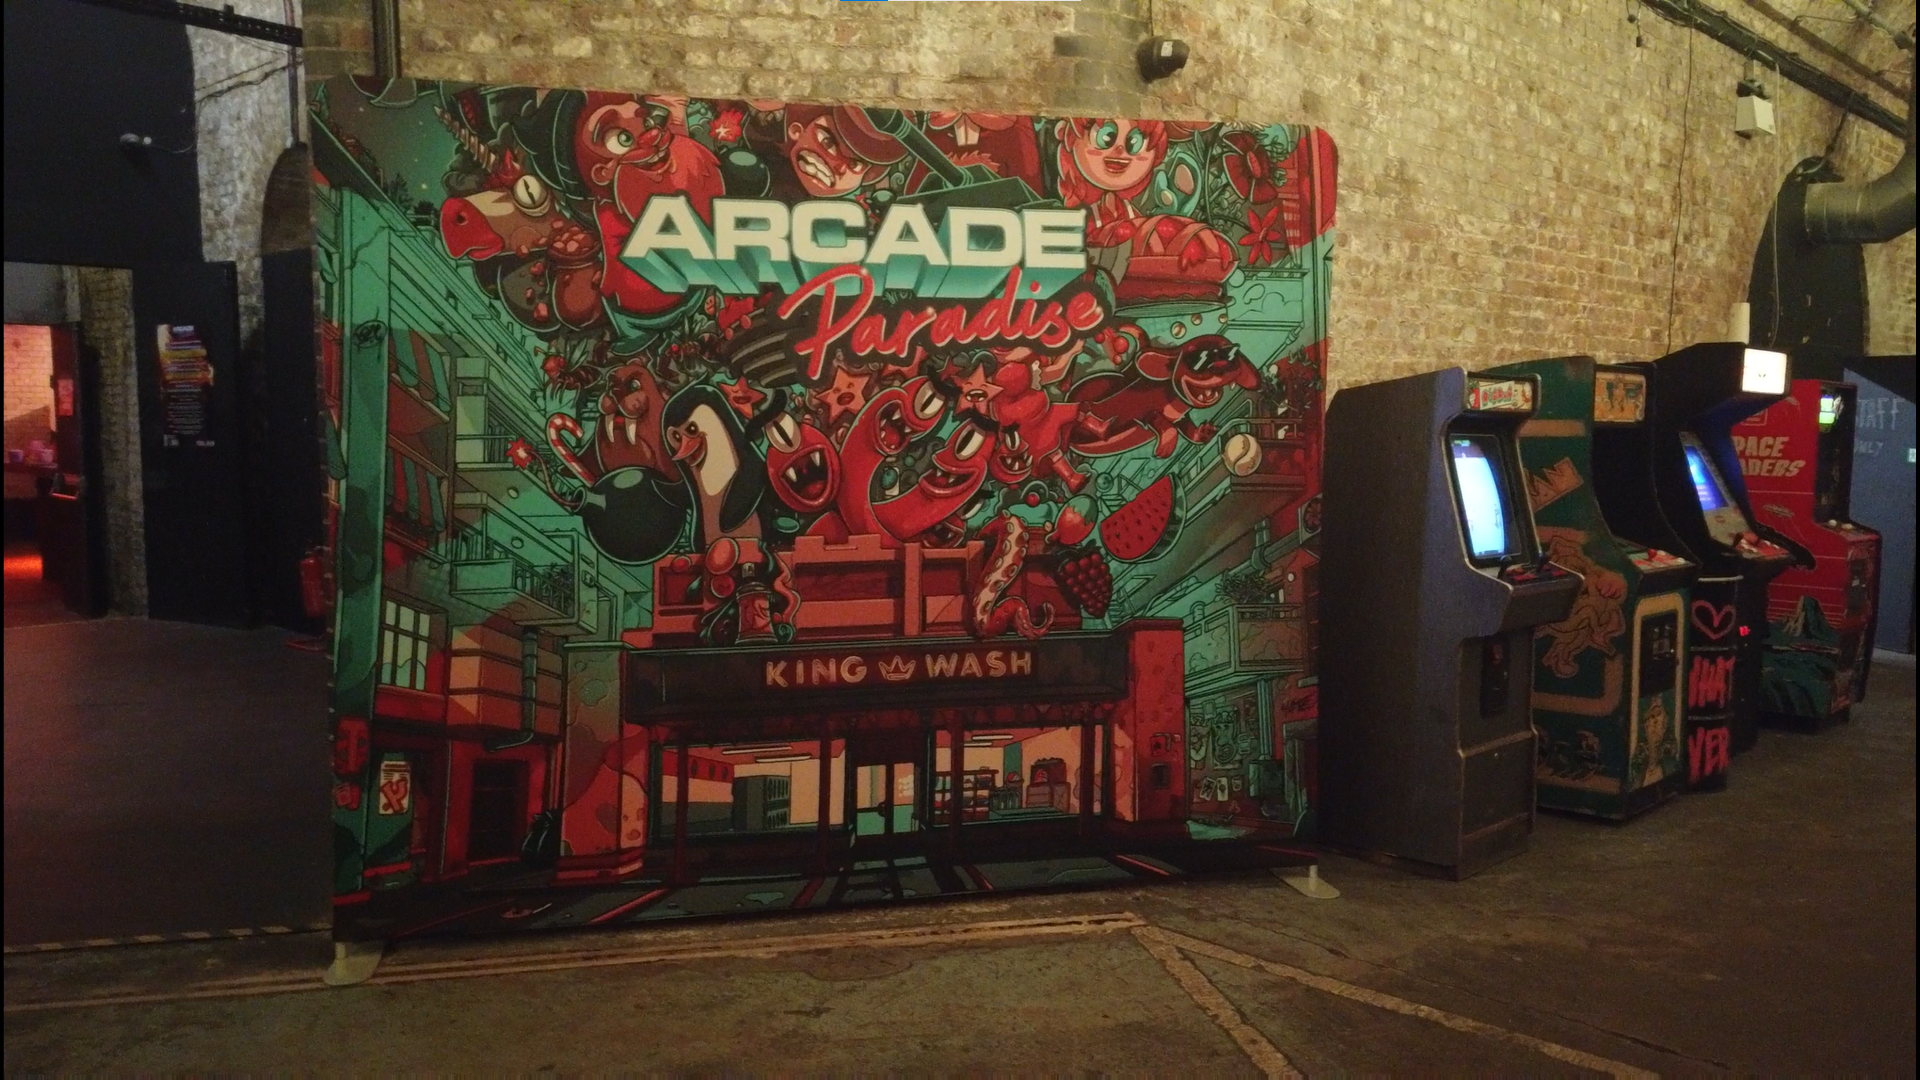 An canvas sheet with Arcade Paradise artwork alongside four retro arcade cabinets